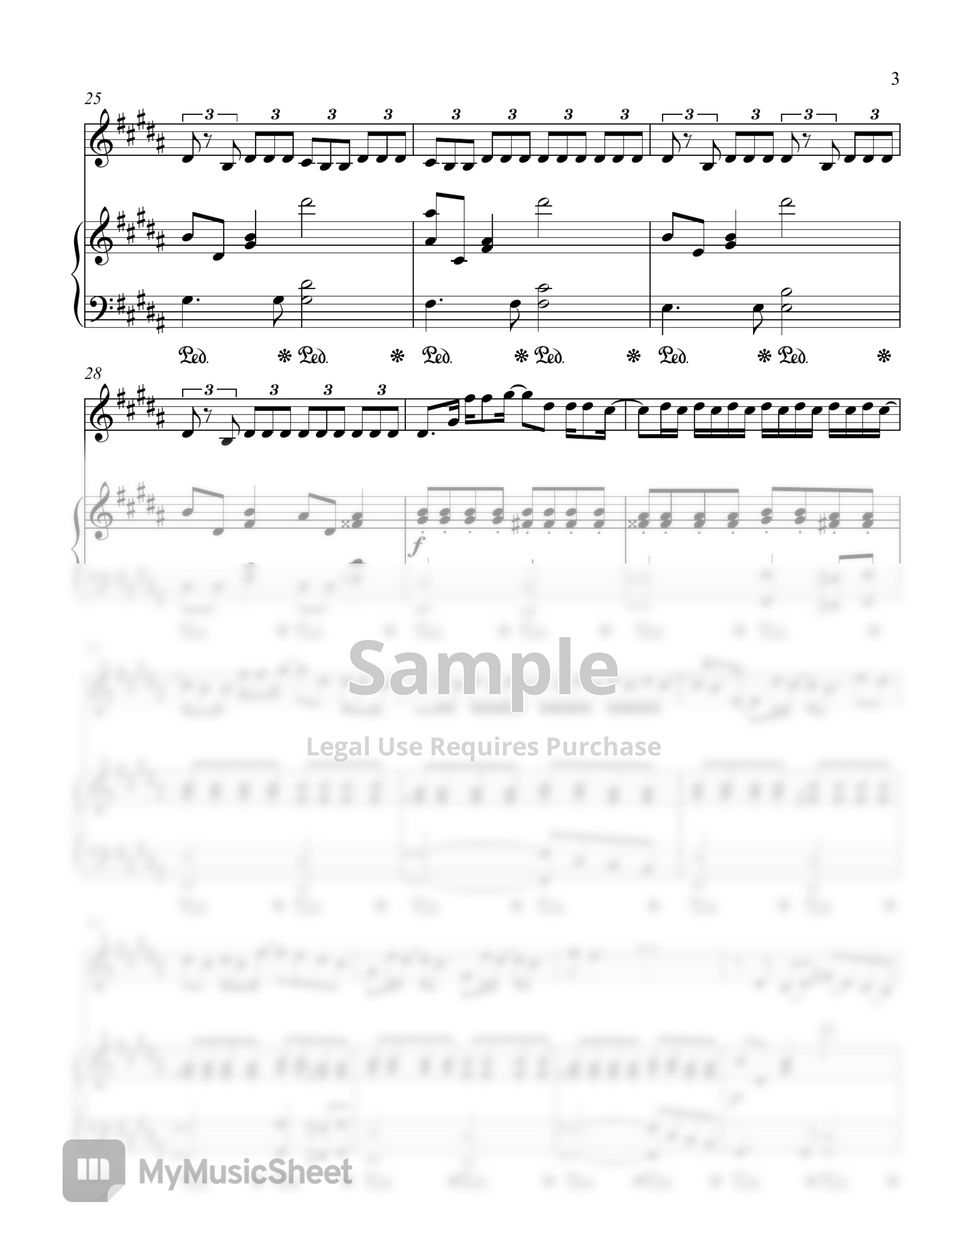 BoyWithUke - TOXIC violin sheet